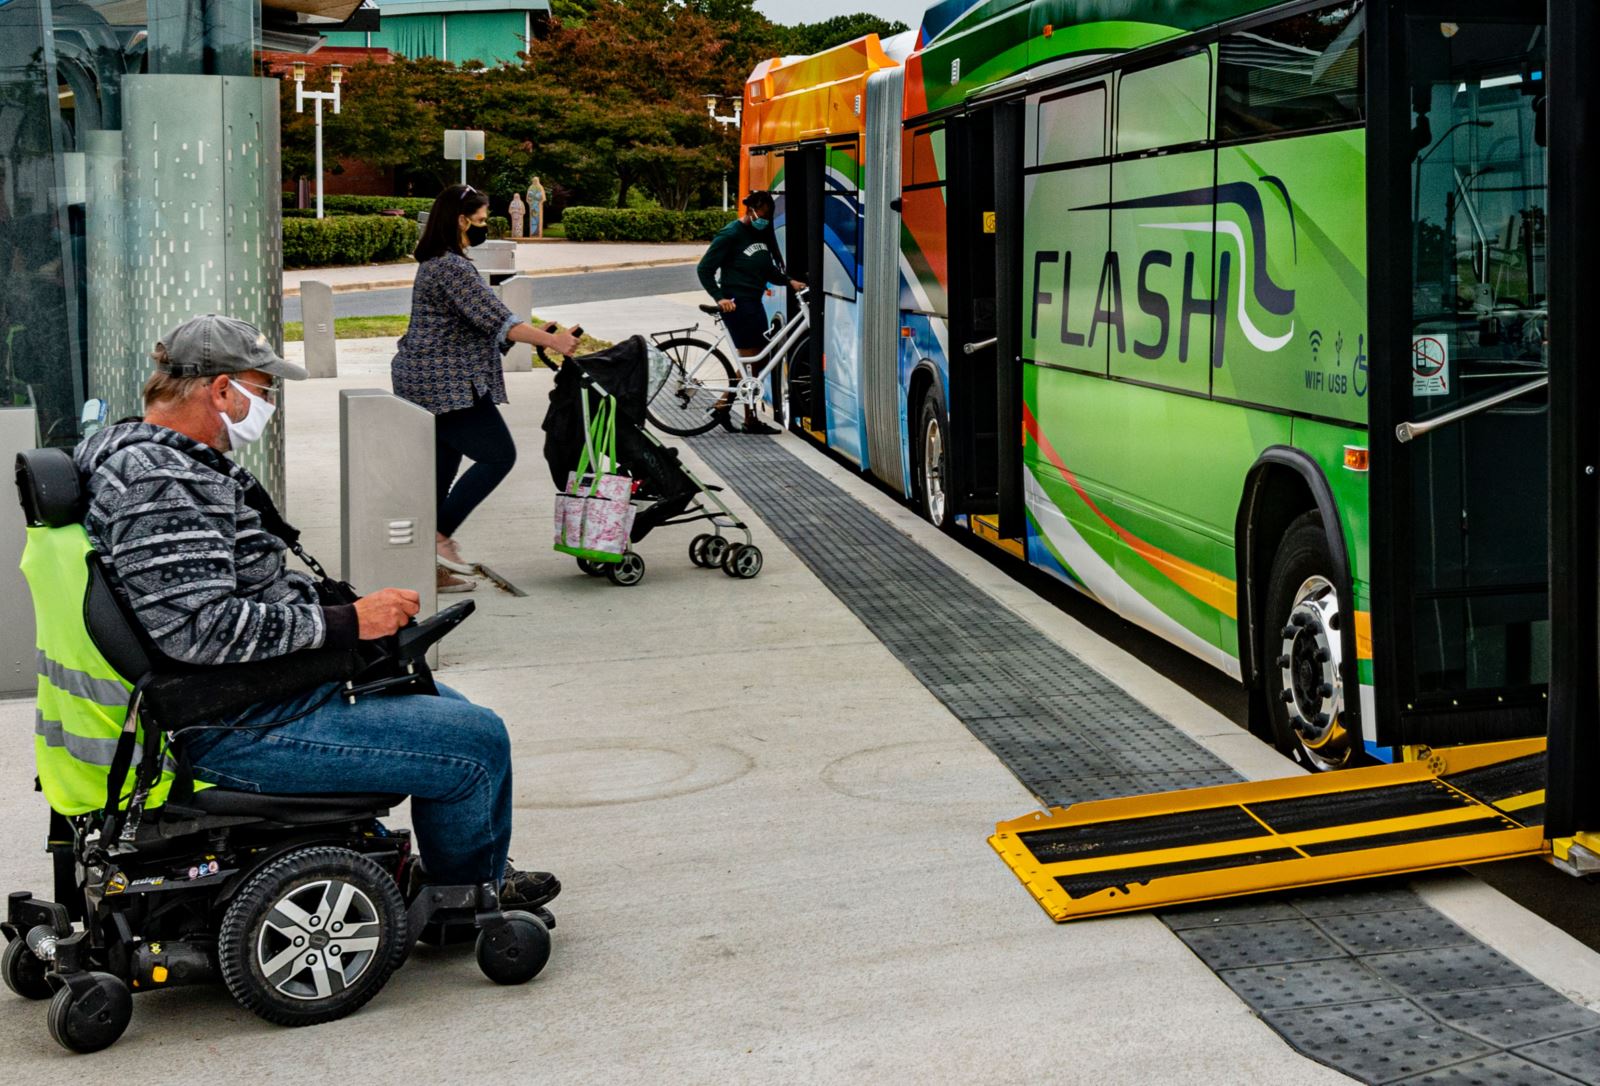 Stroller, bike, scooter boarding the Flash bus